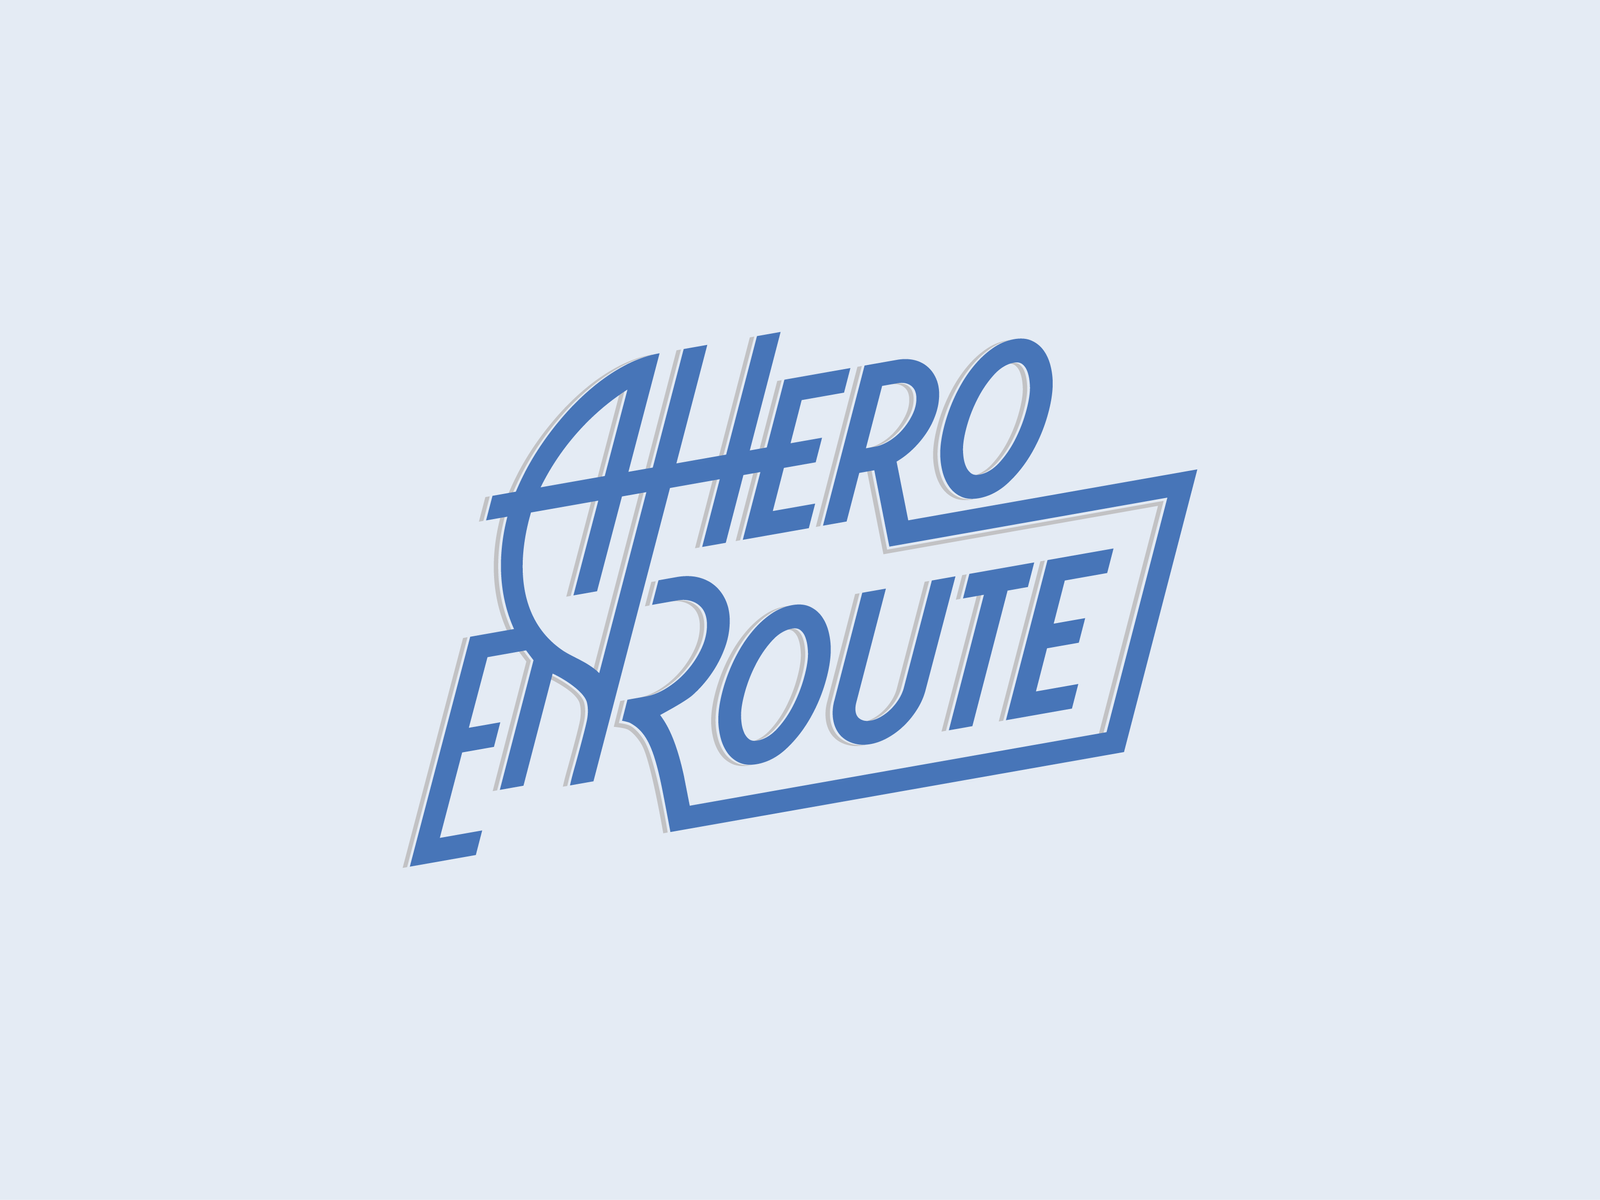 A Hero En Route band logo by Augustus Rivers Brightman